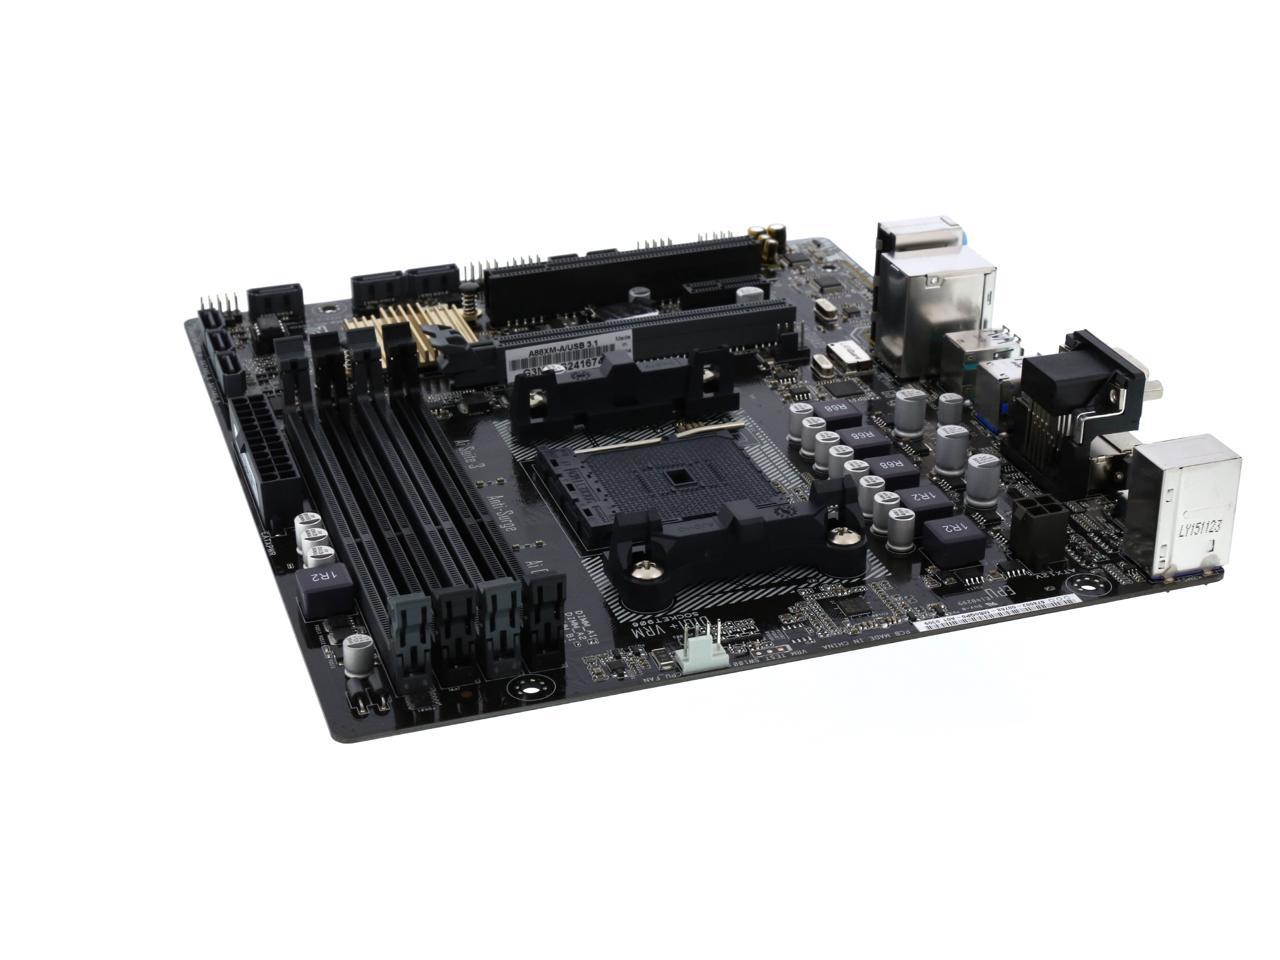 ASUS A88XM-A/USB 3.1 Micro ATX AMD Motherboard - Newegg.com